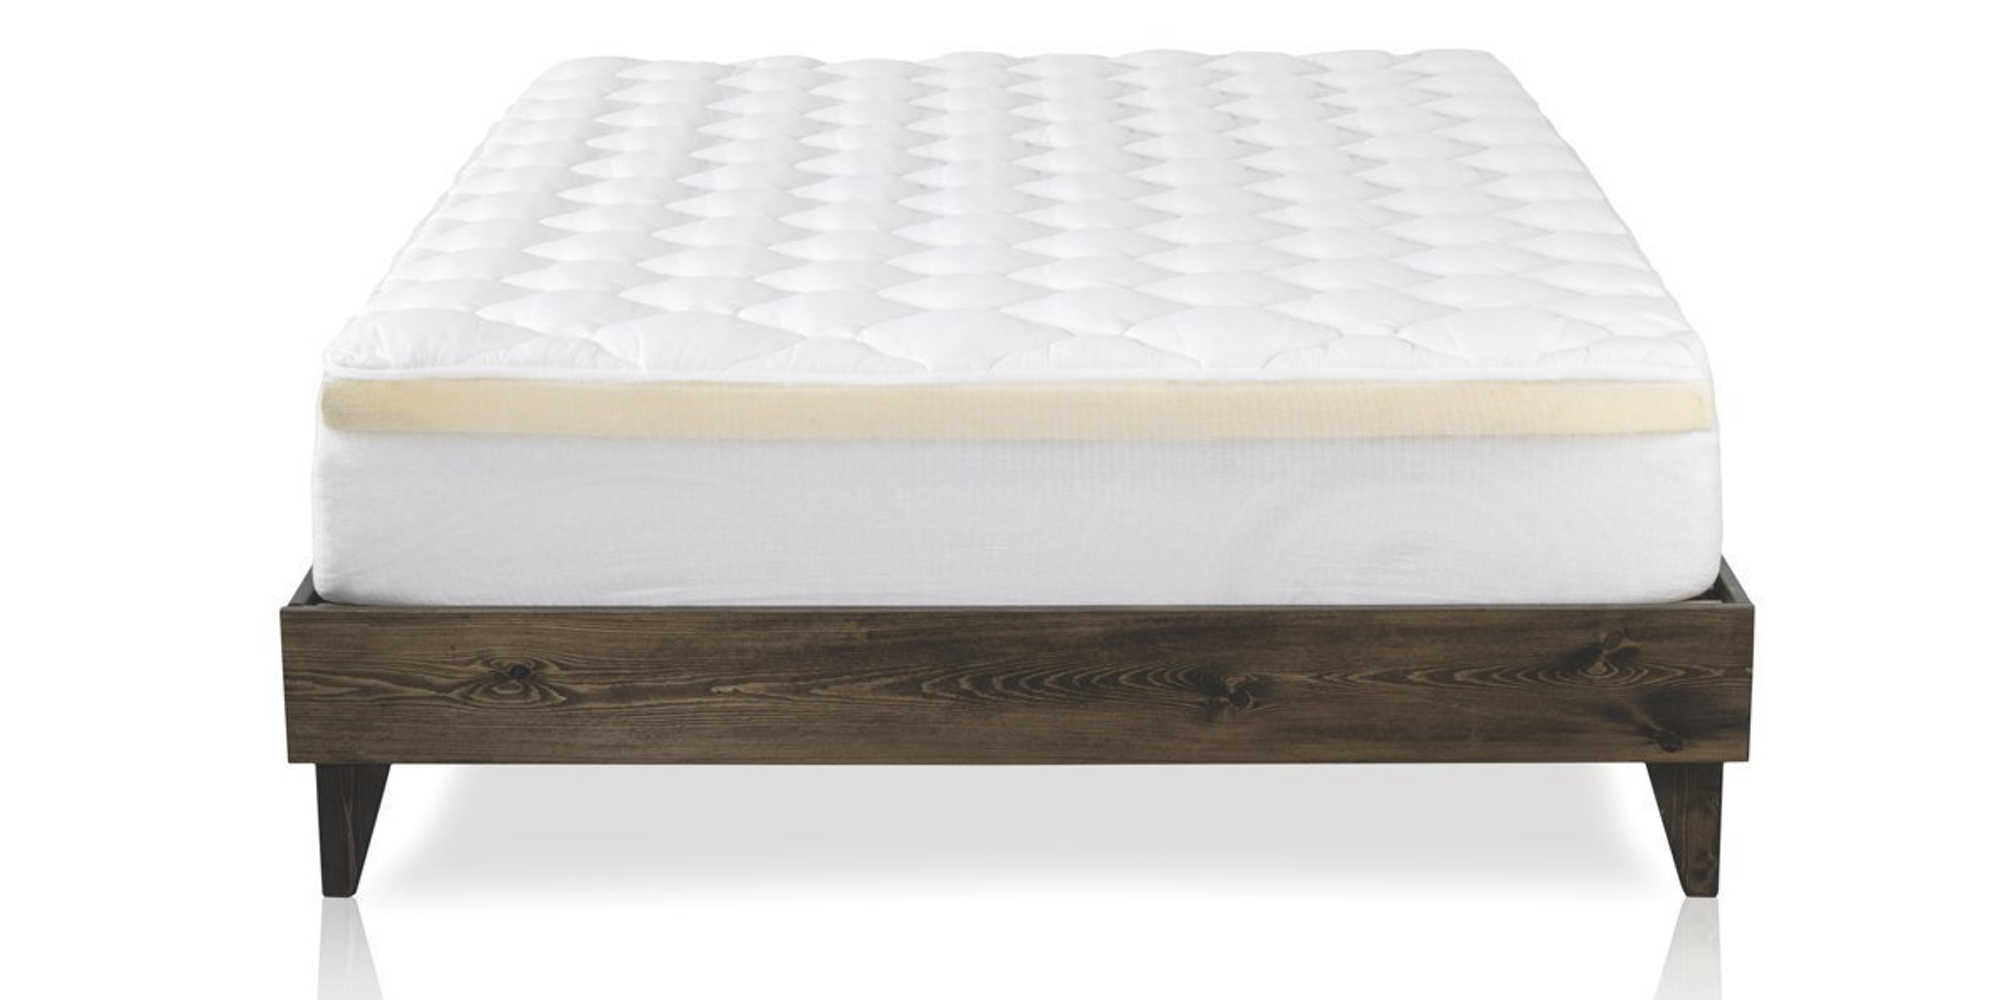 thick mattress pad for futon